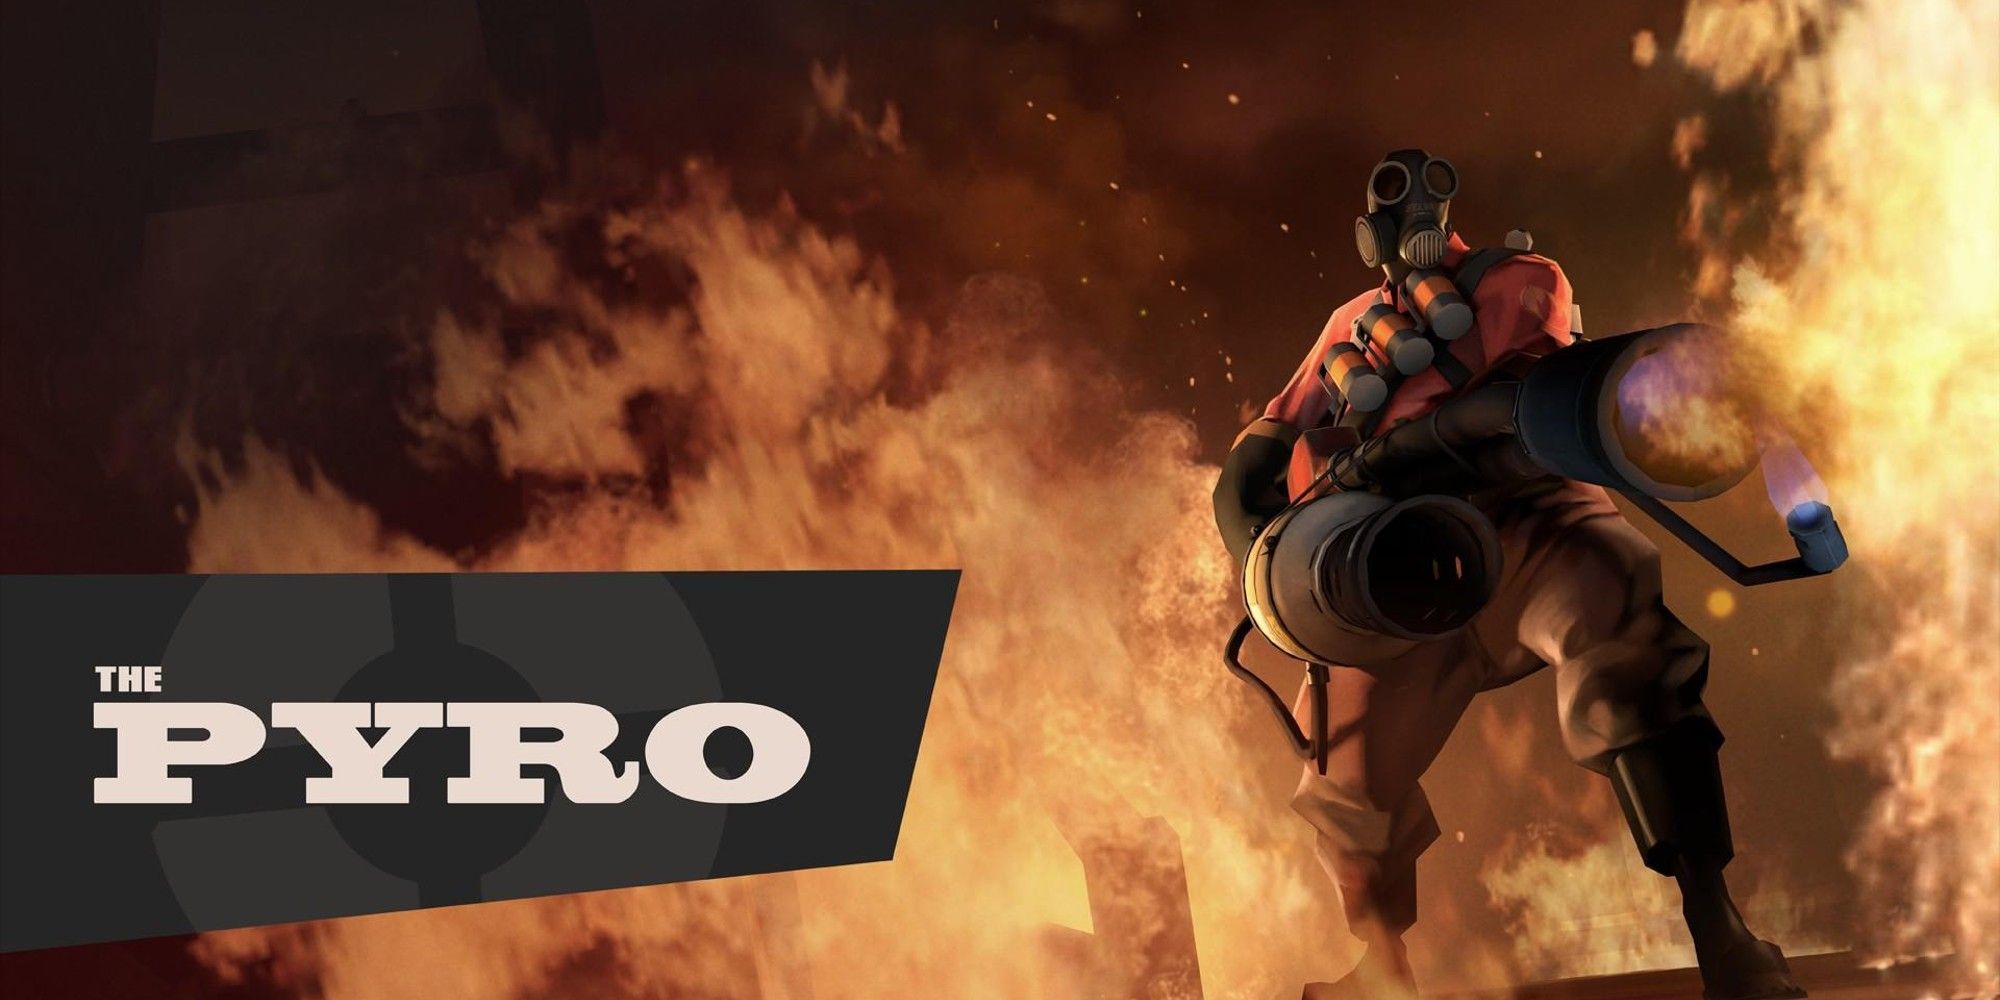 Team Fortress 2 - The Pyro weilding their flamethrower